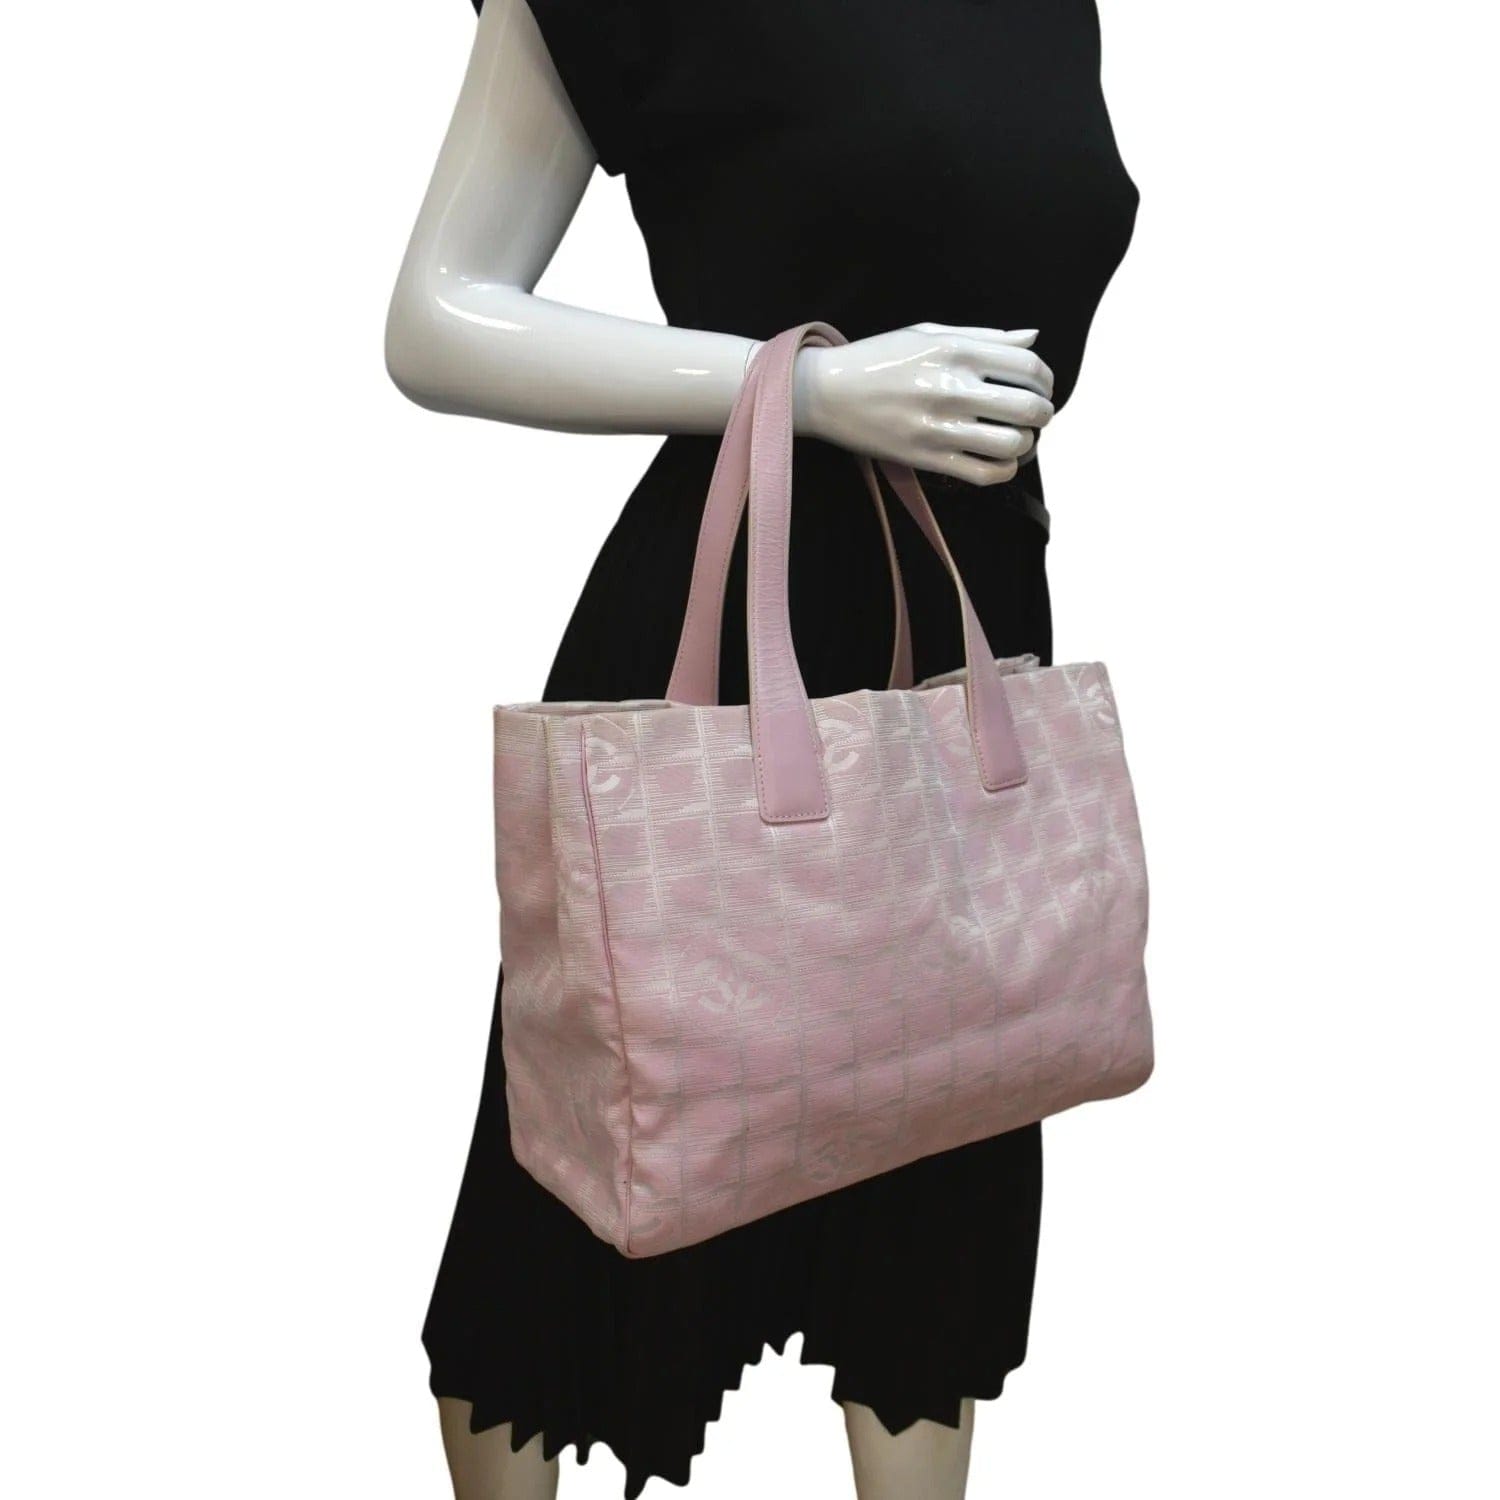 Large Nylon Tote - Handbag/Travel Bag